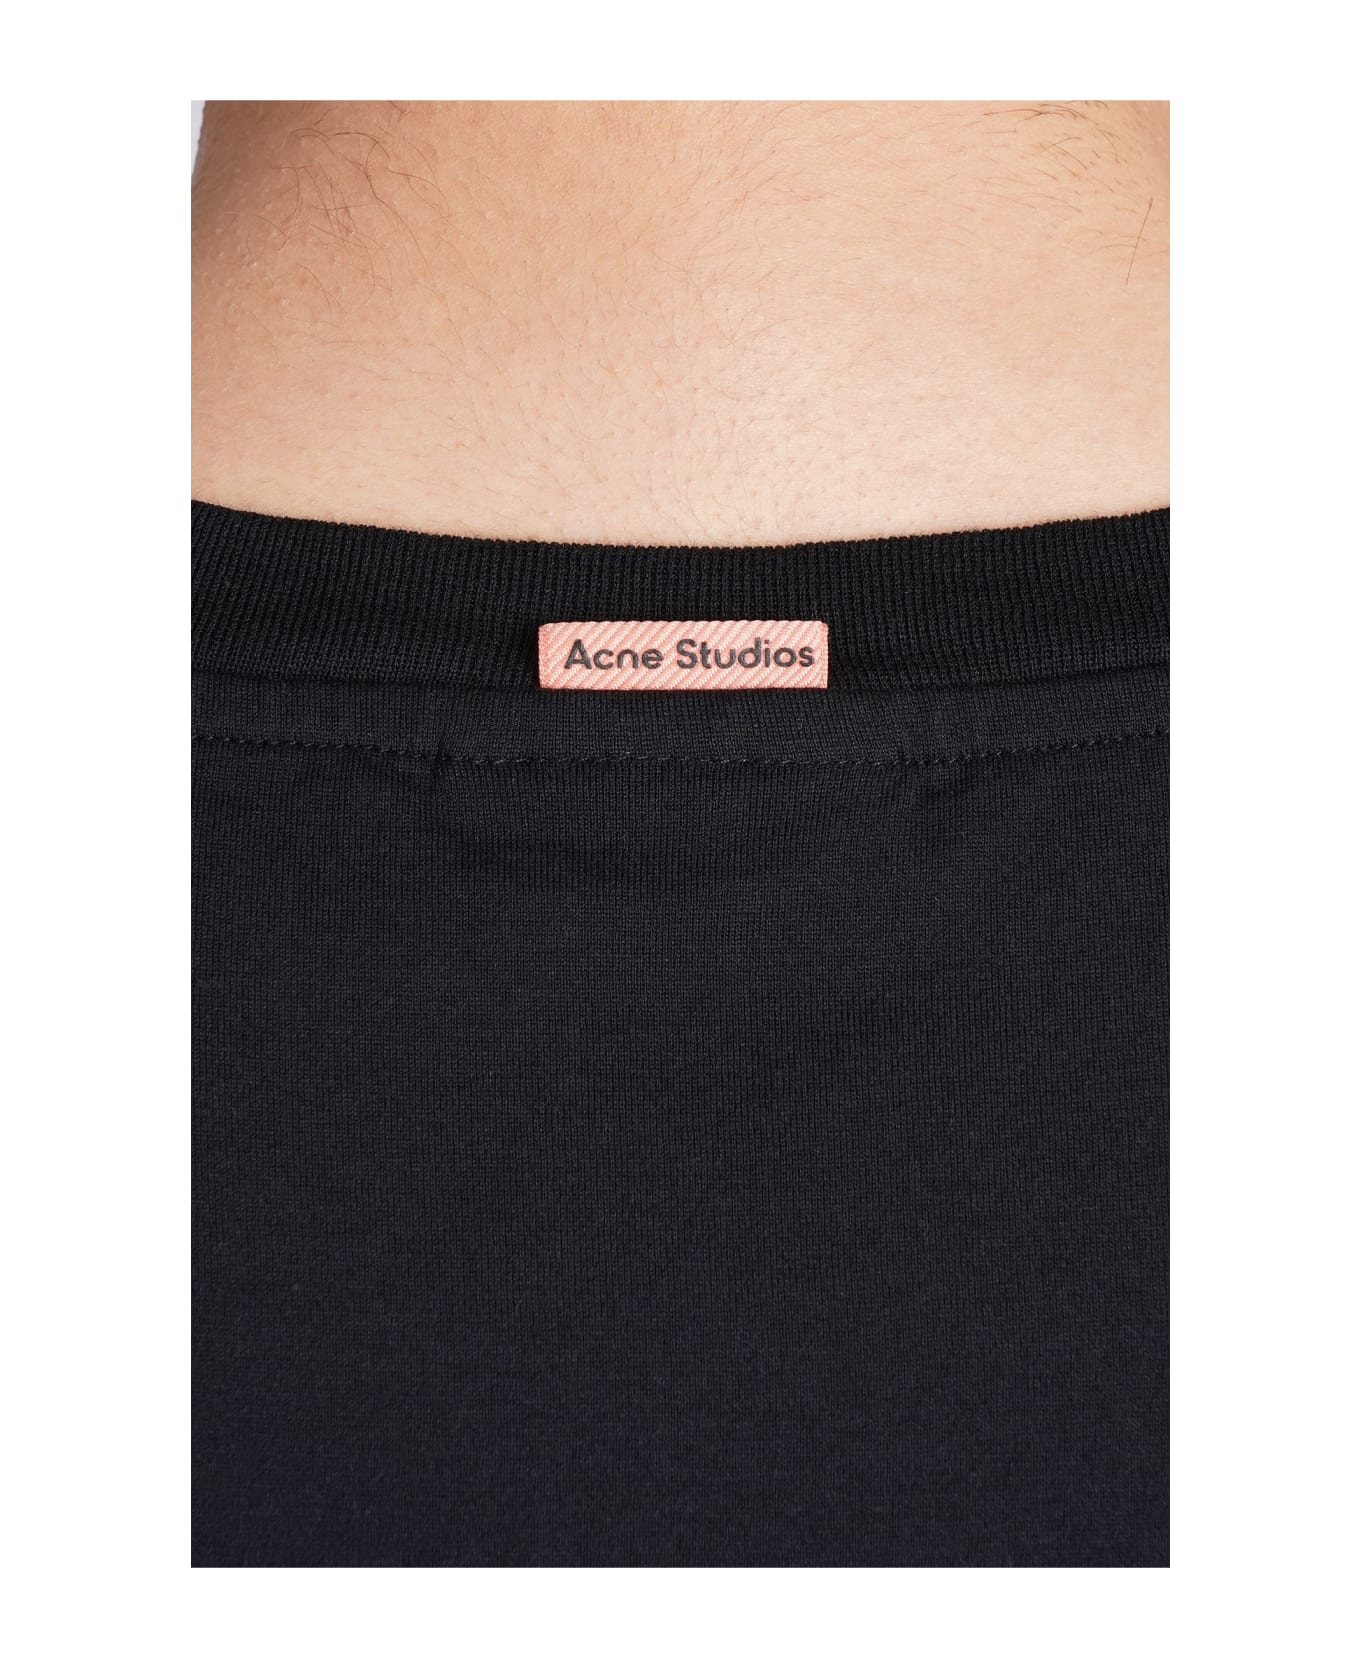 Acne Studios Logo T-shirt Topwear In Black Cotton - black